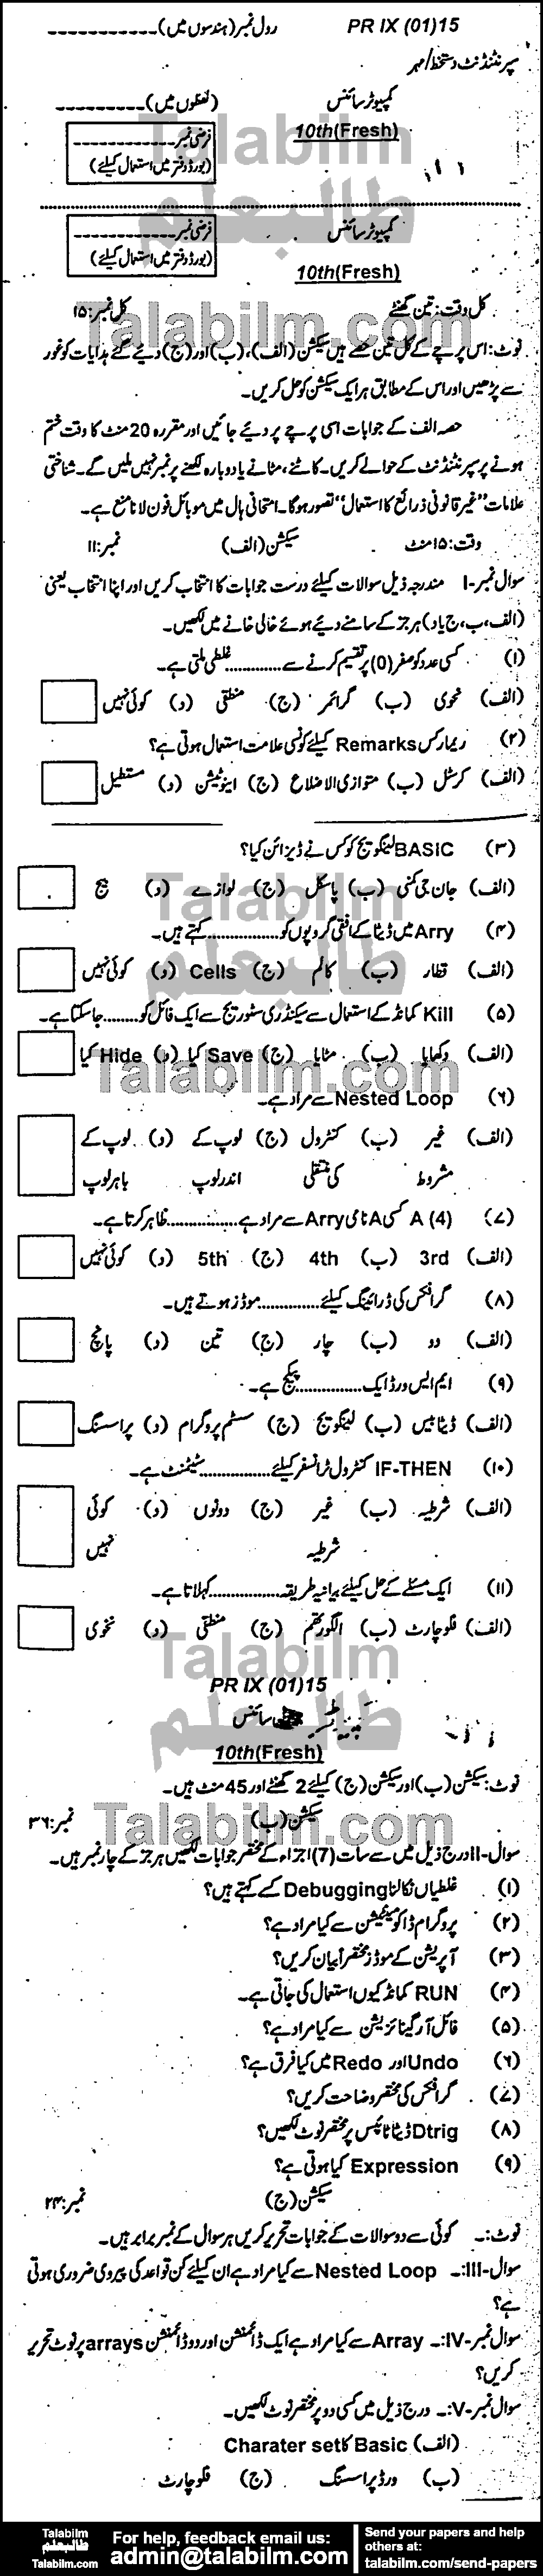 Computer Science 0 past paper for Urdu Medium 2015 Group-I